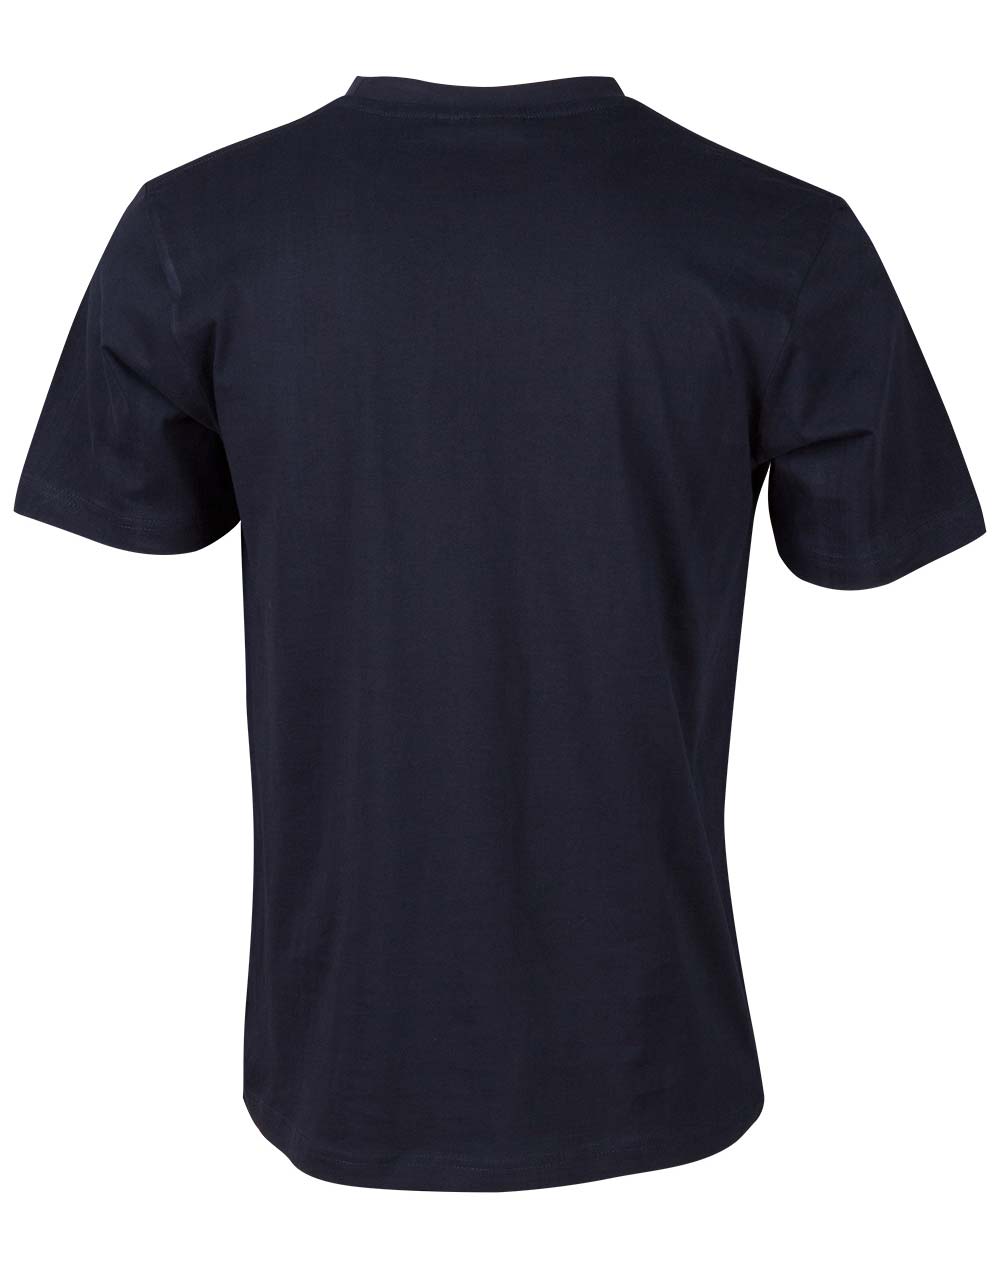 Custom (Cyan) Semi-Fitted T-Shirts Men's Cotton Online in Perh Australia